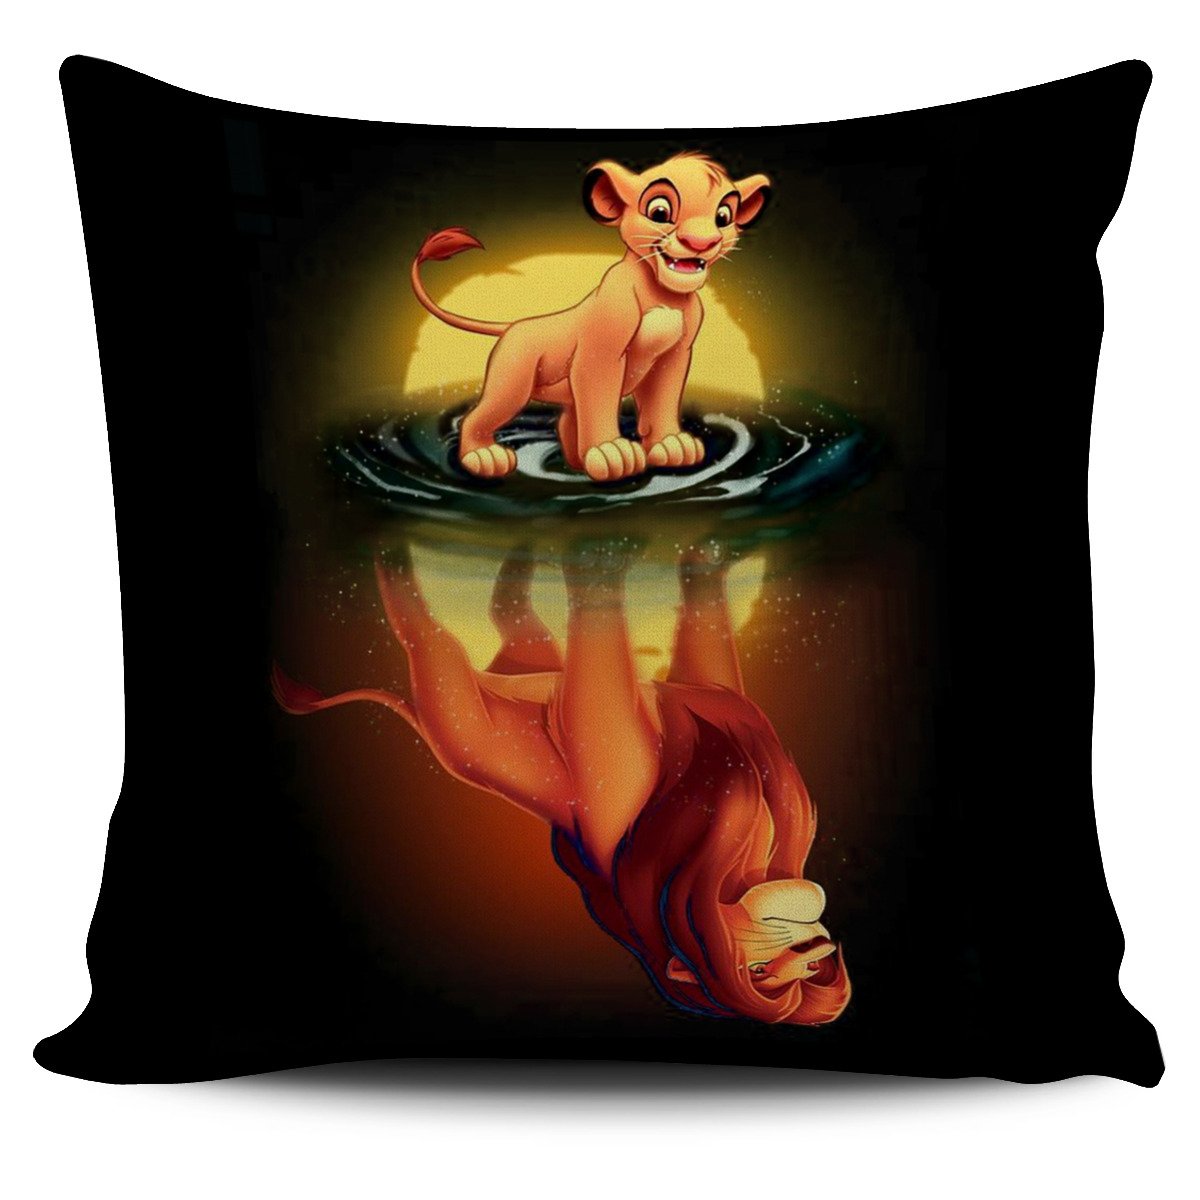 Simba Lion King Pillow Cover